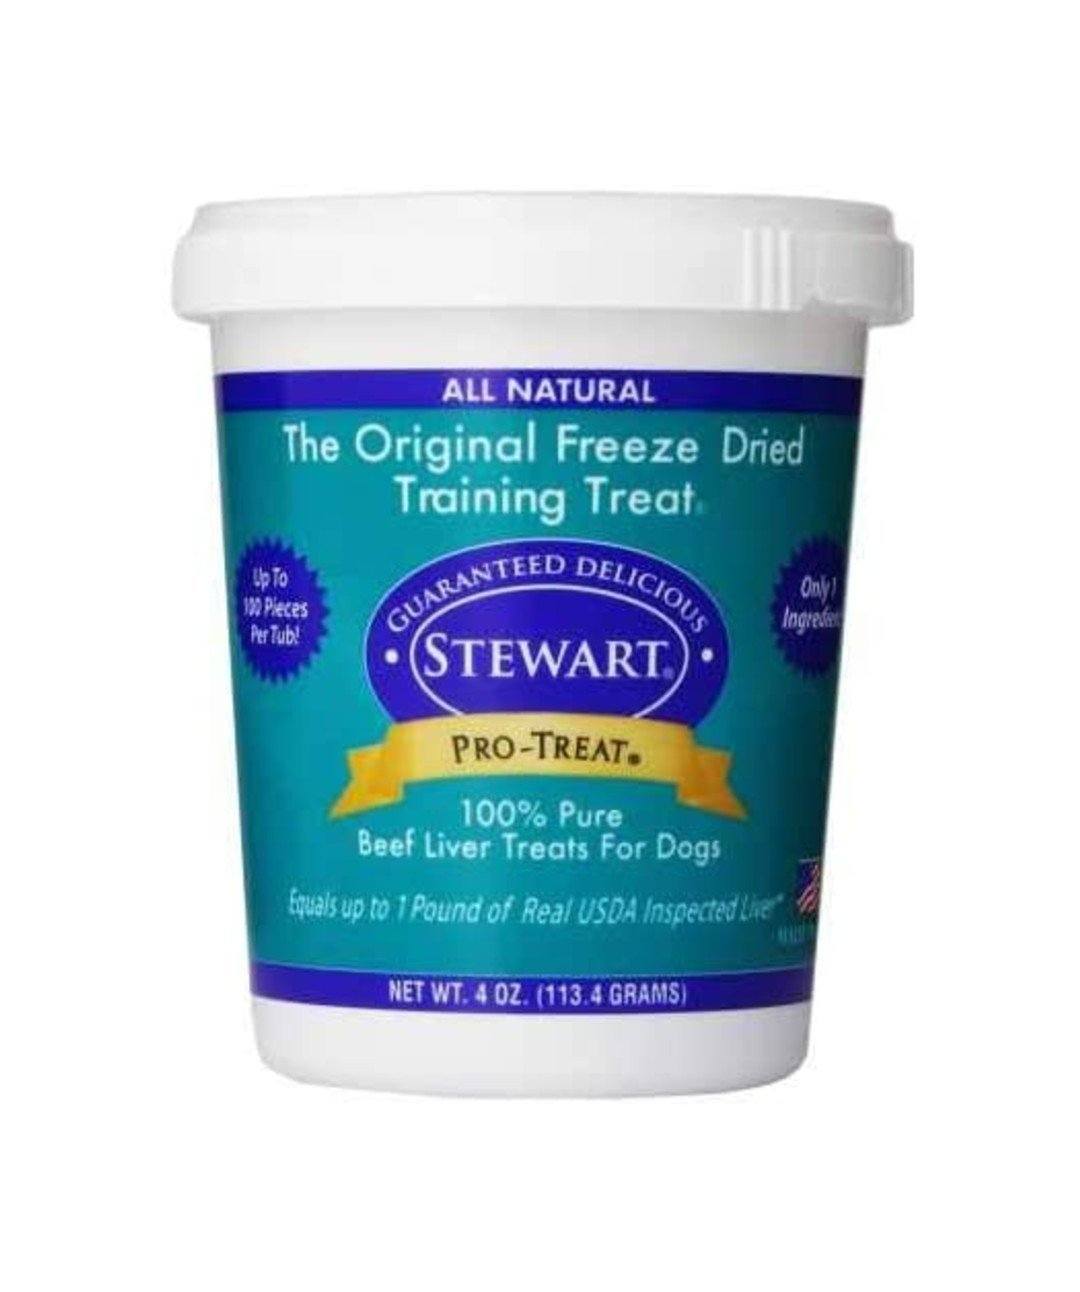 Stewart Freeze-Dried Liver Dog Treats Dog Treats Rover Store 4 oz 